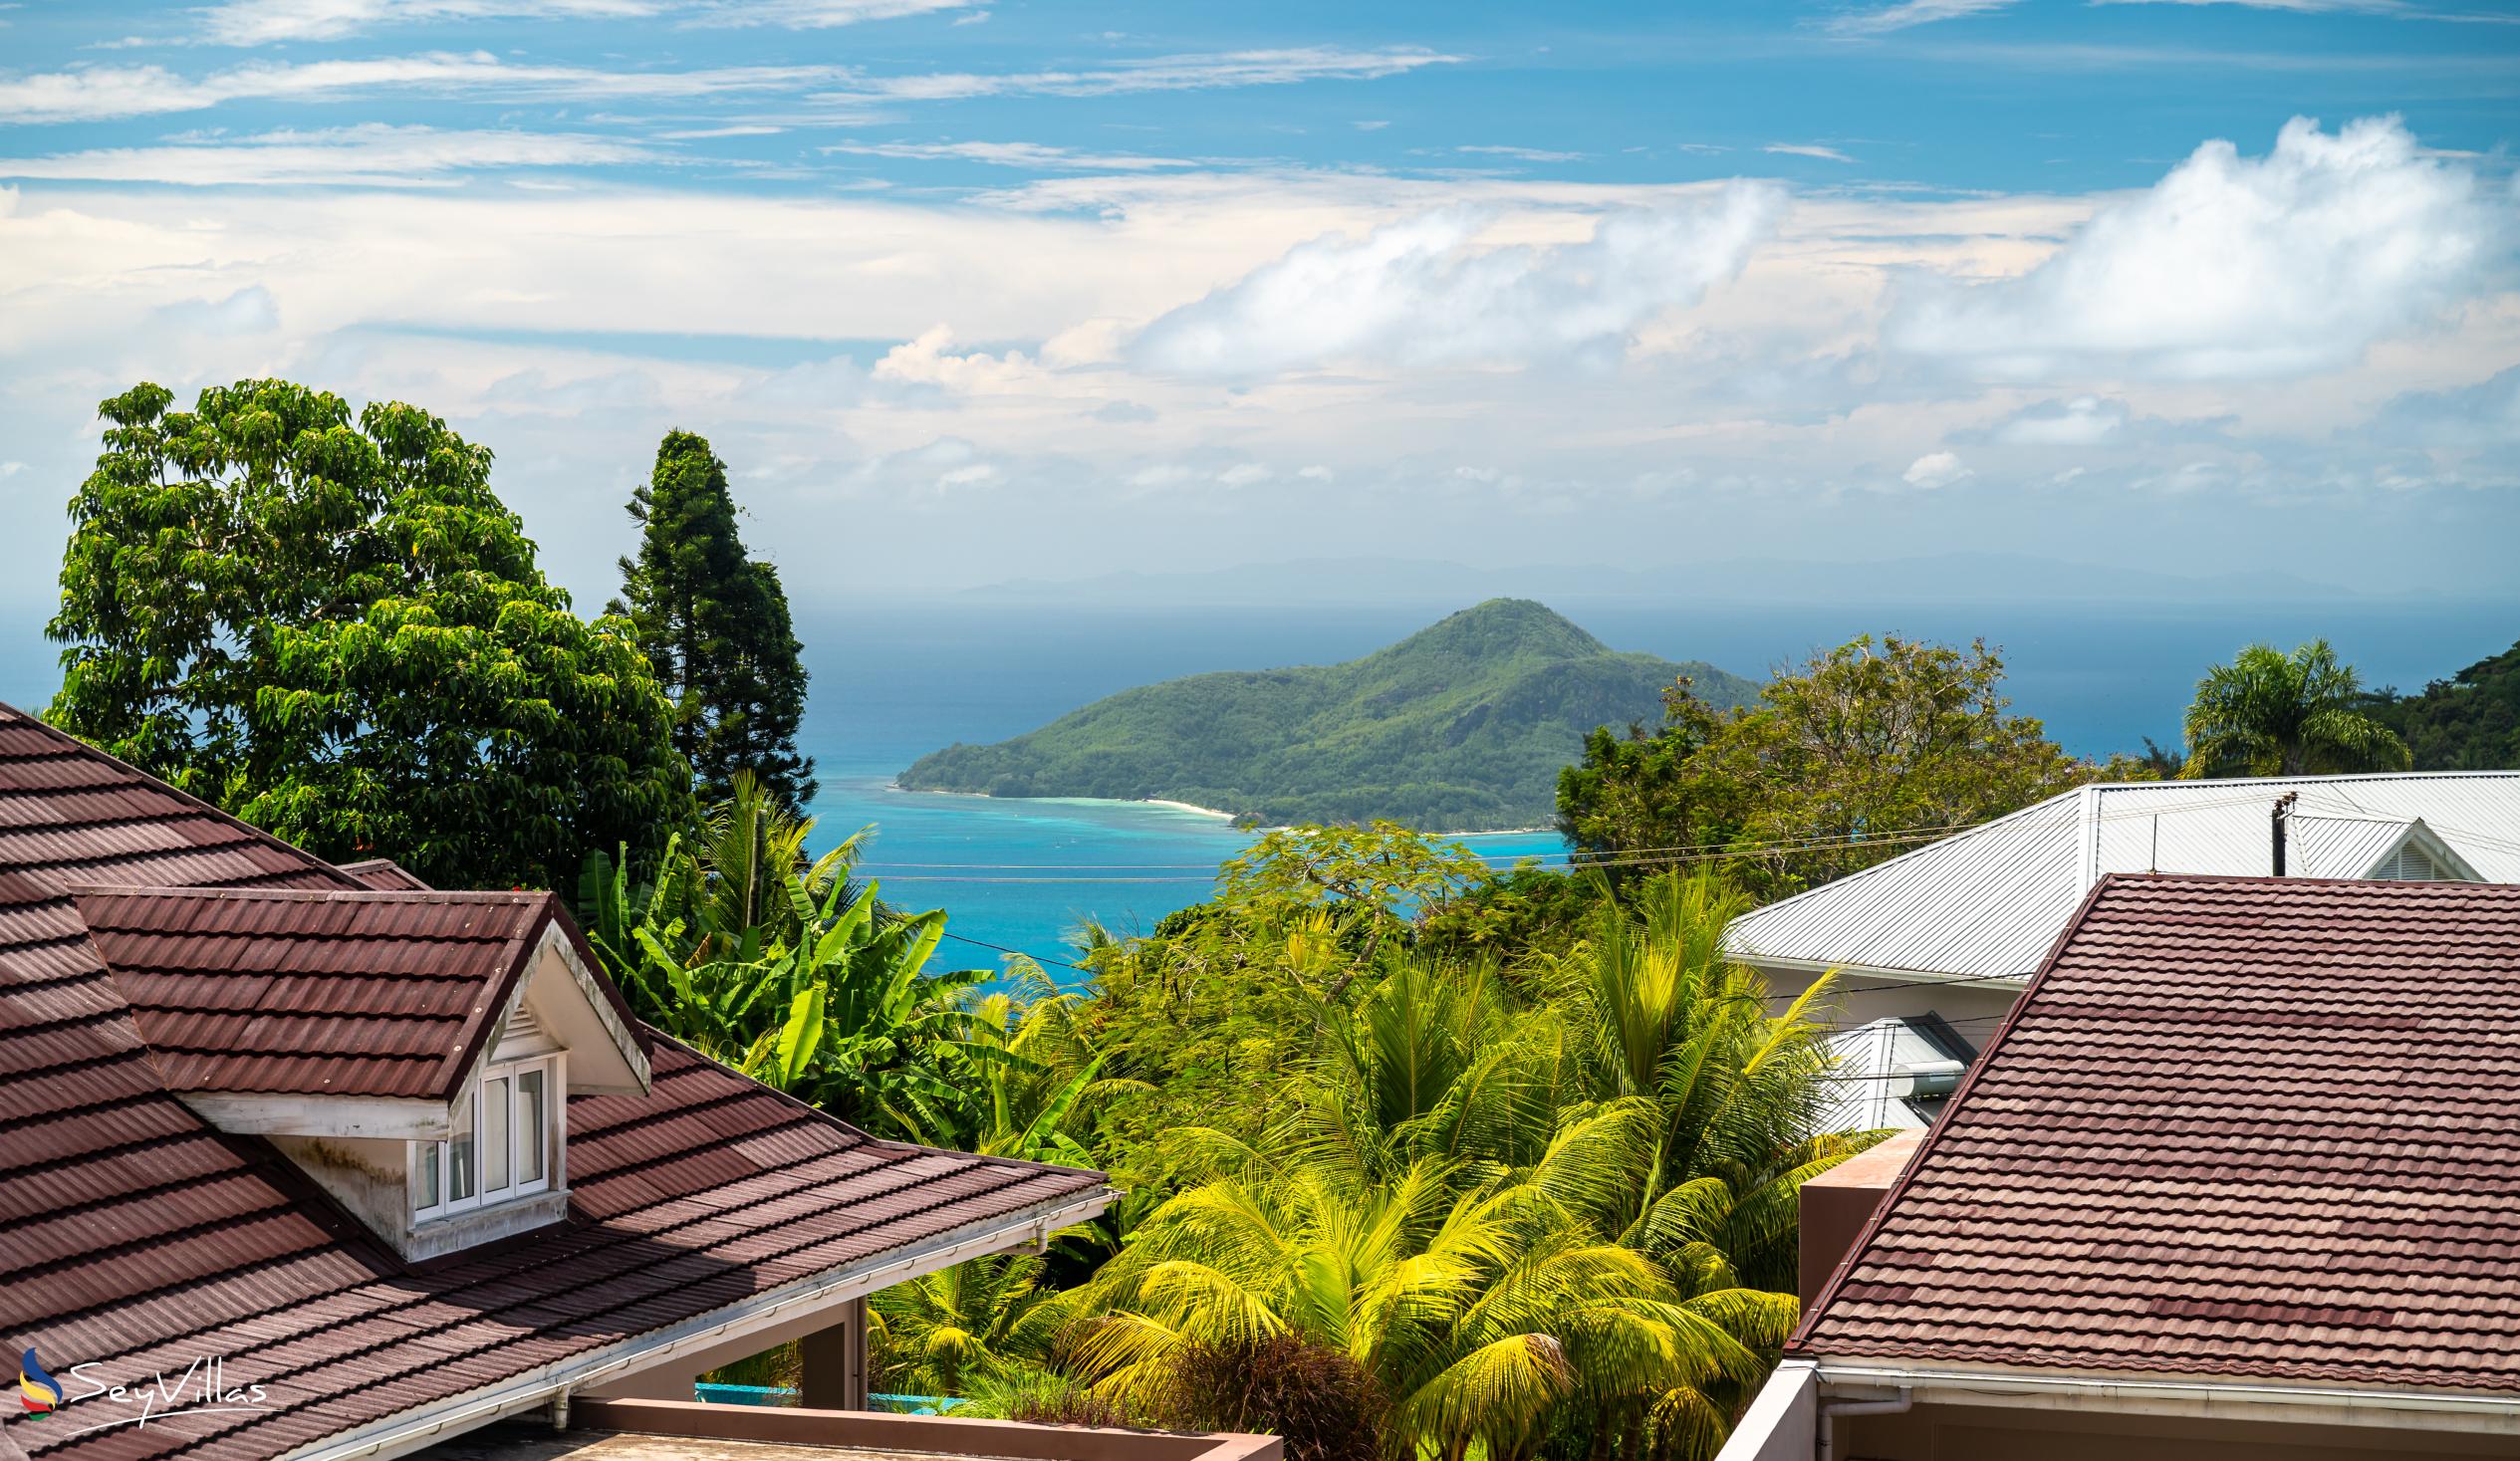 Photo 3: Cliffhanger Villas - Outdoor area - Mahé (Seychelles)